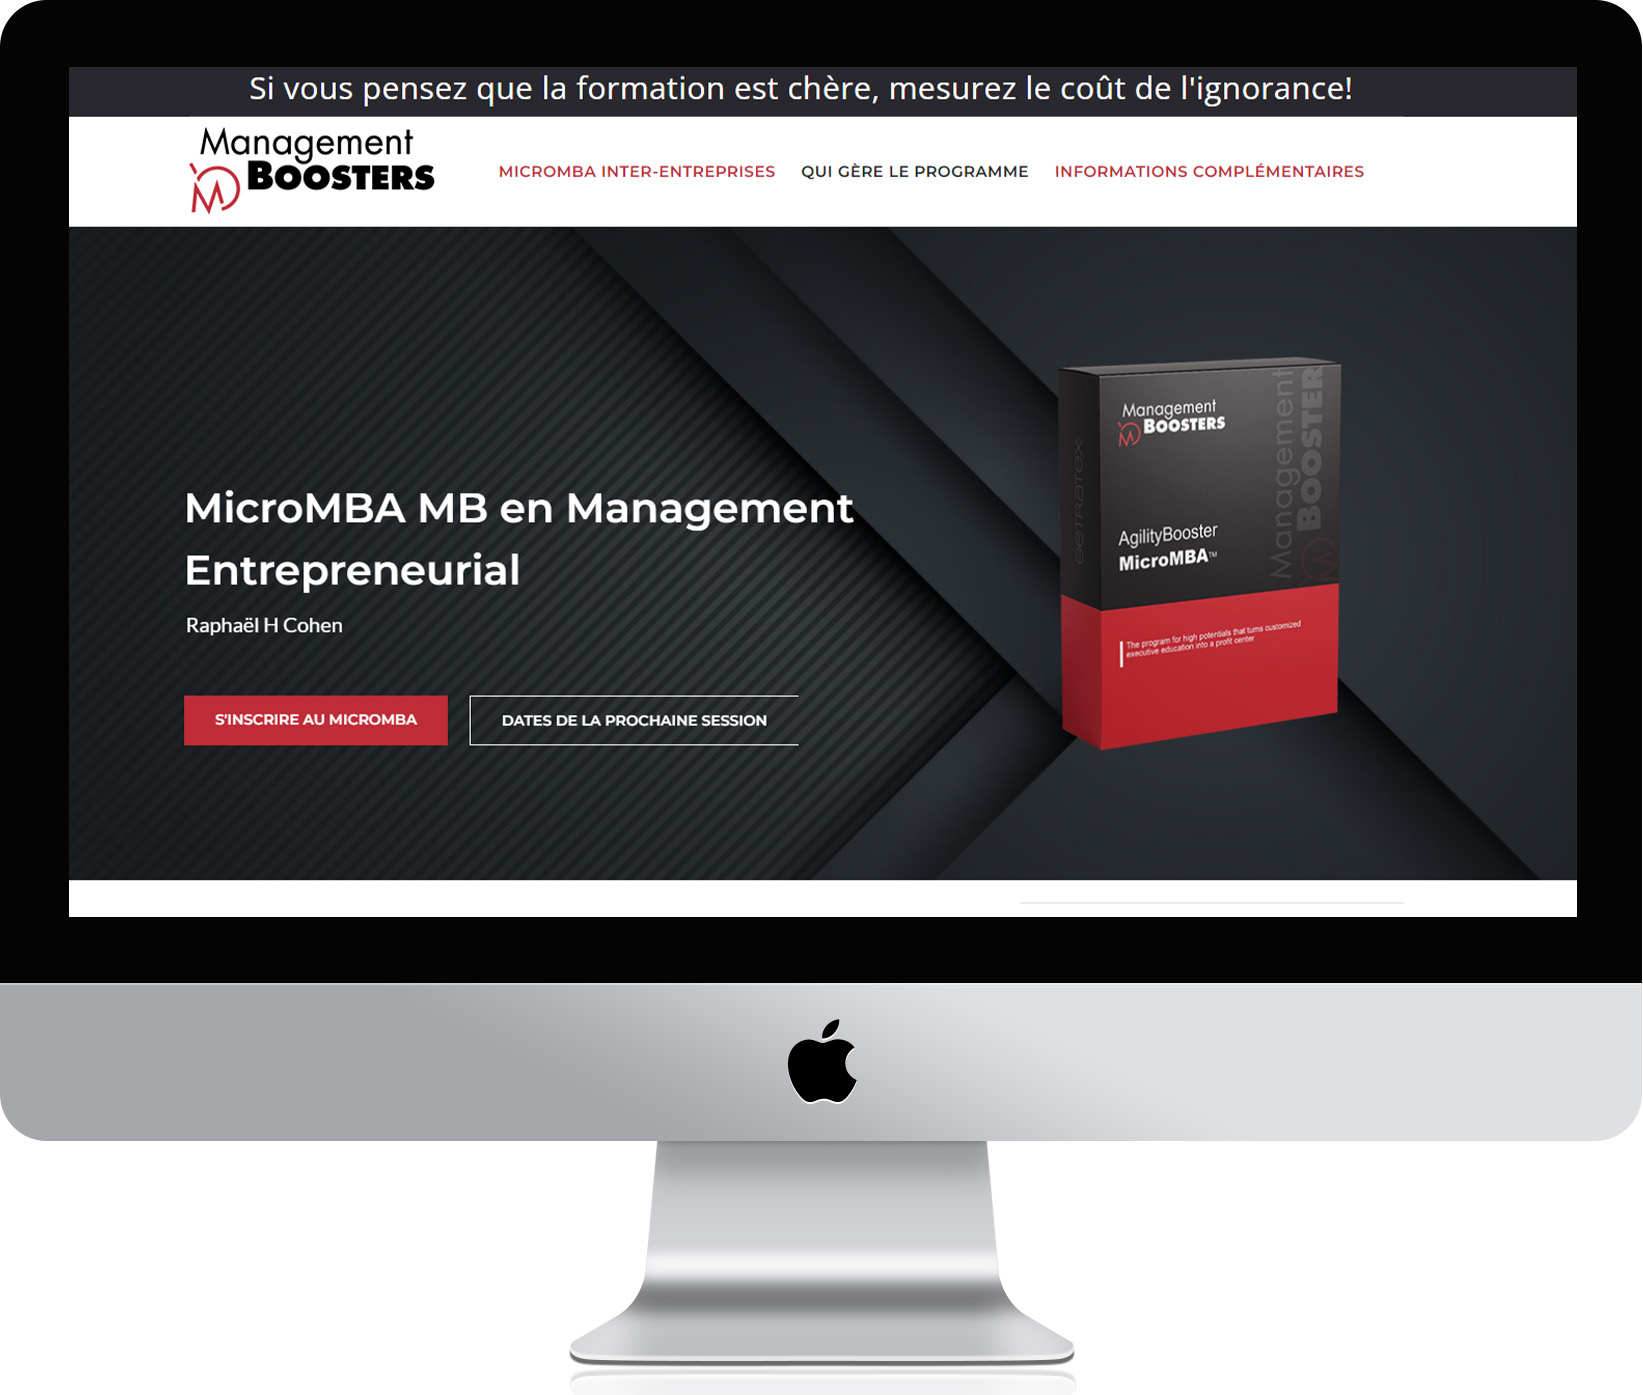 MicroMBA MB en Management Entrepreneurial